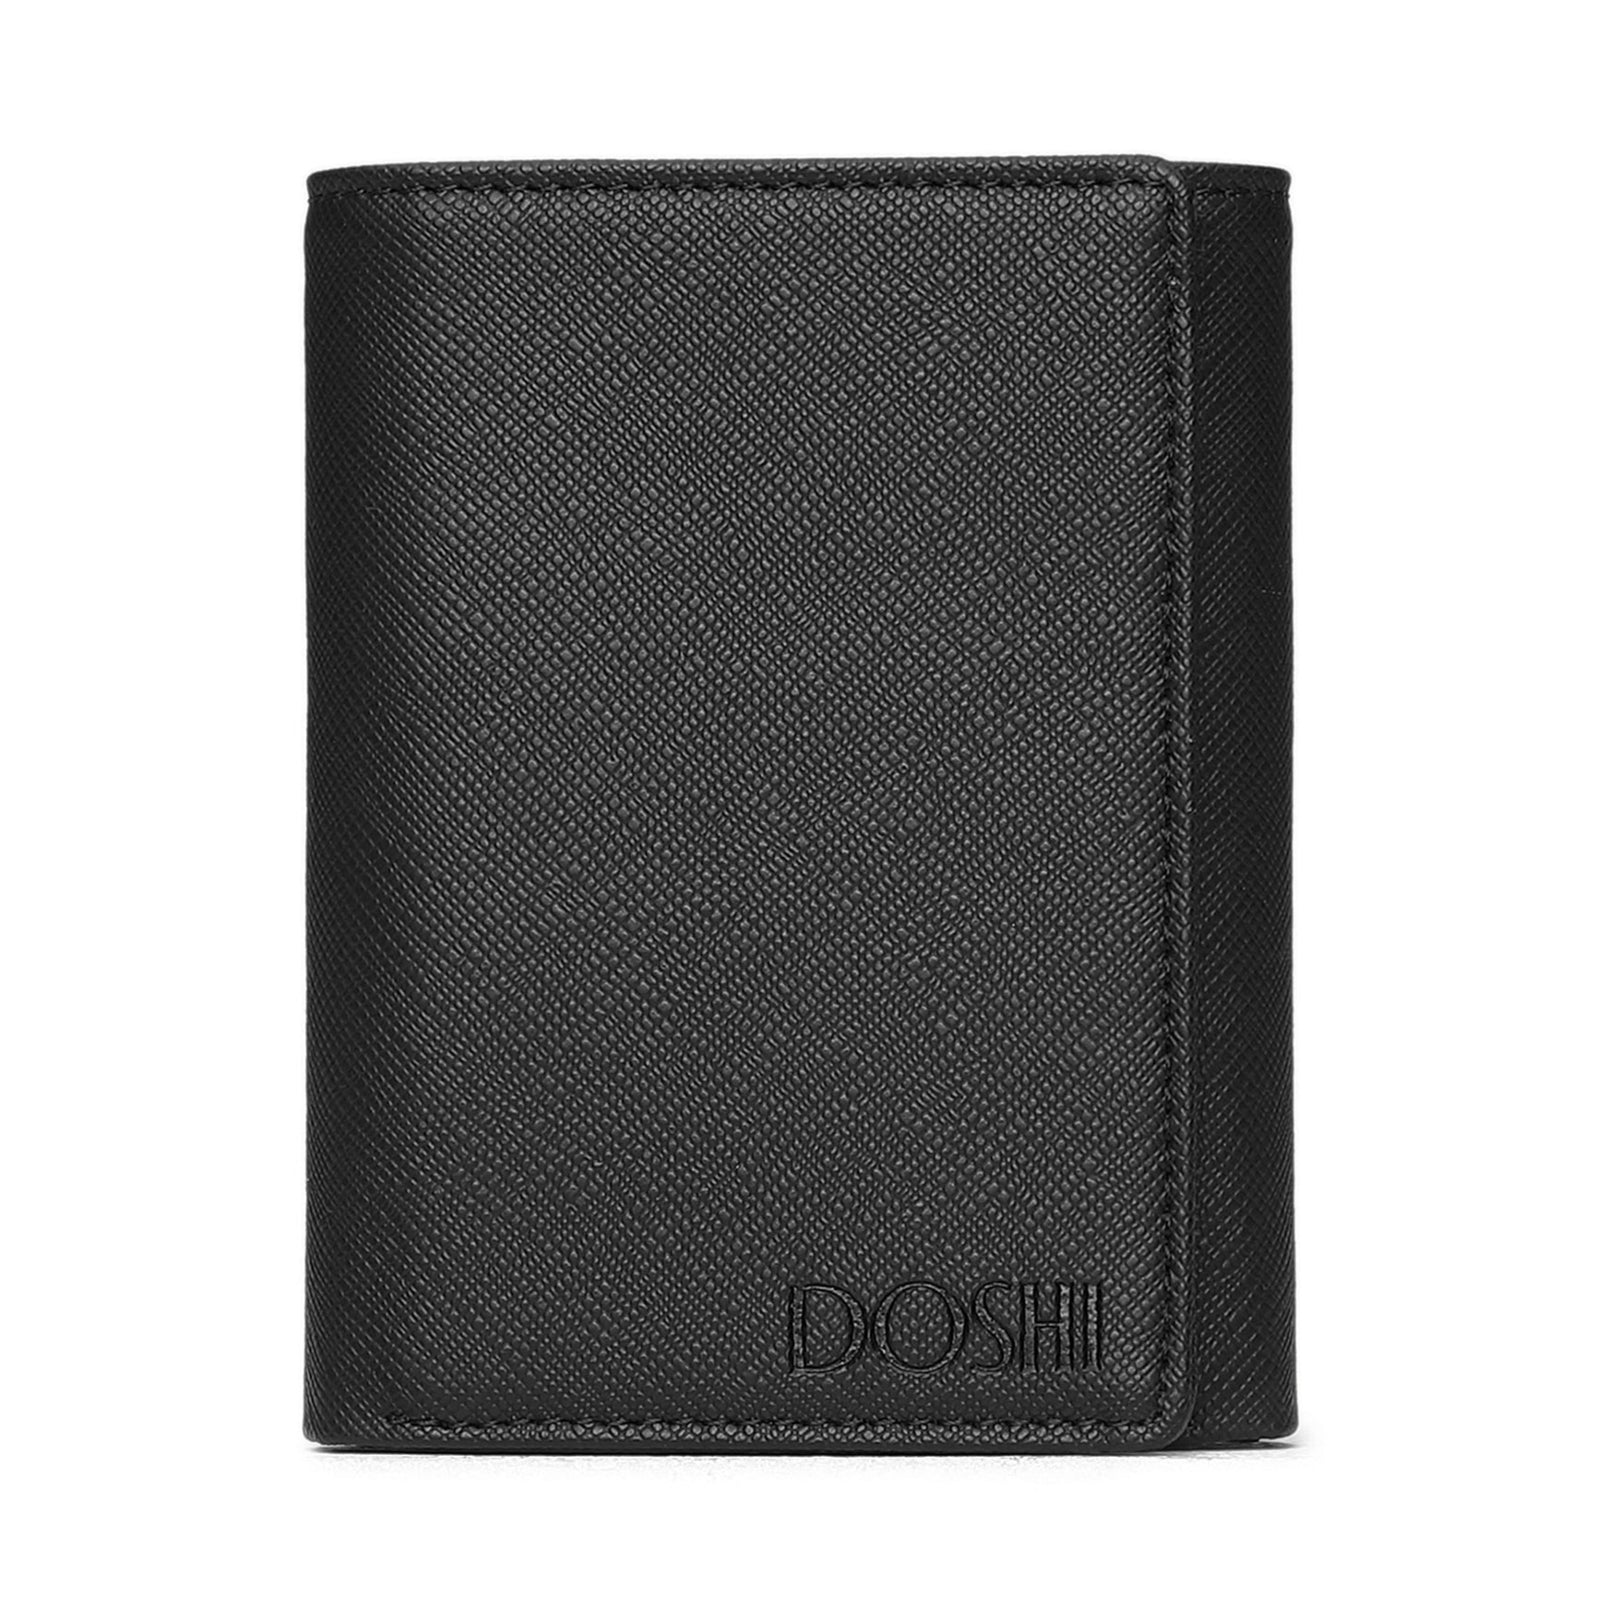 DOSH RFID Luxe 6-Card Compact Designer Money Clip Wallet 